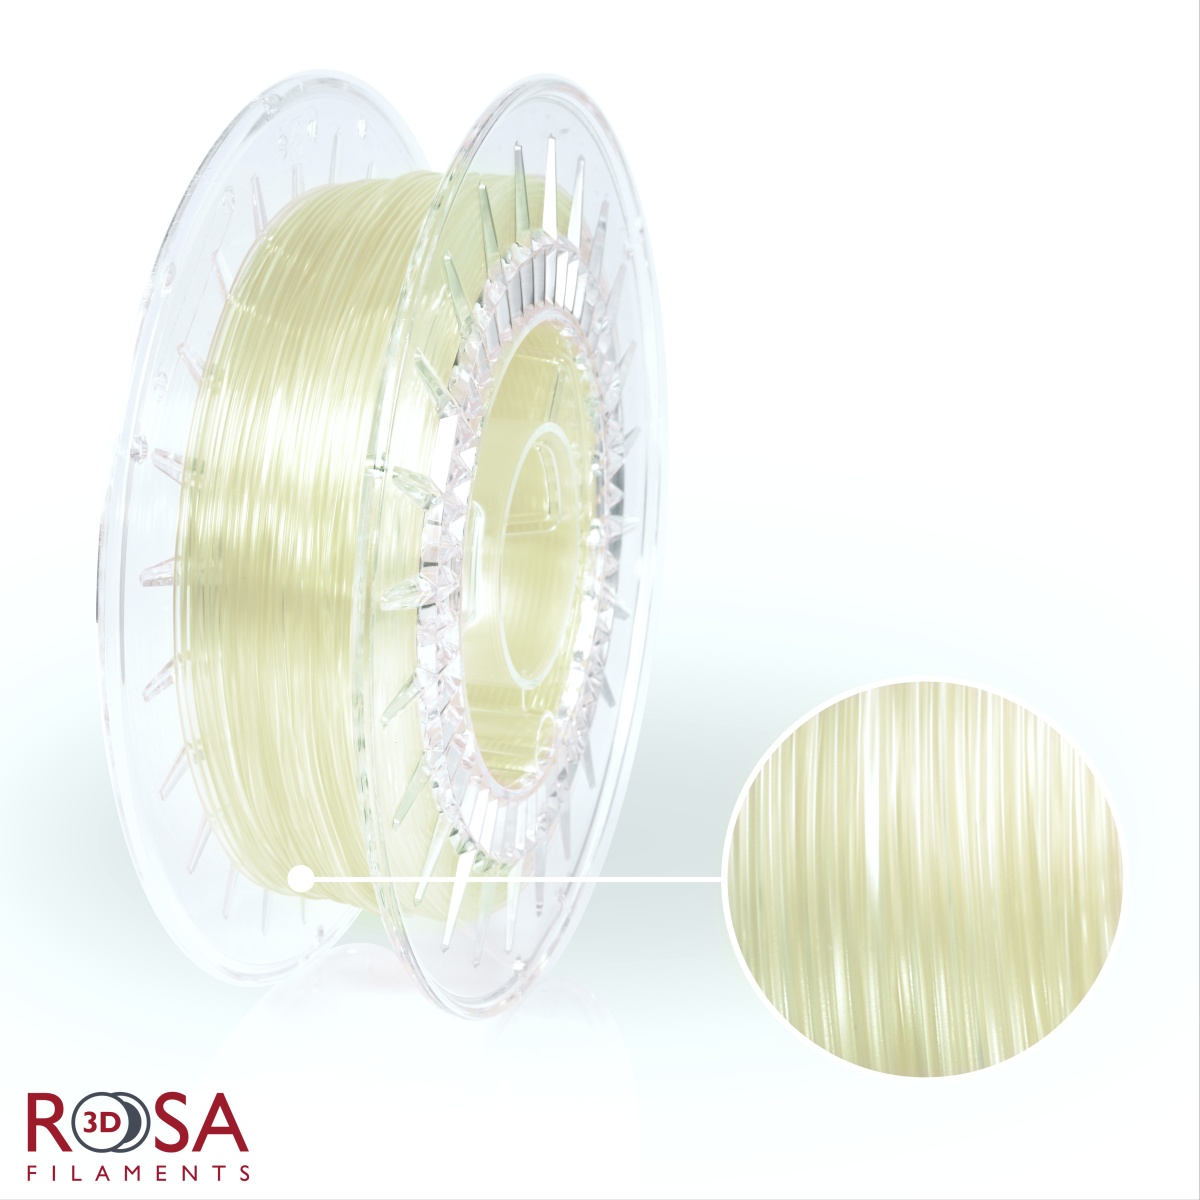 szpula filamentu PVA o wadze 0,5 kg produkcji ROSA3D